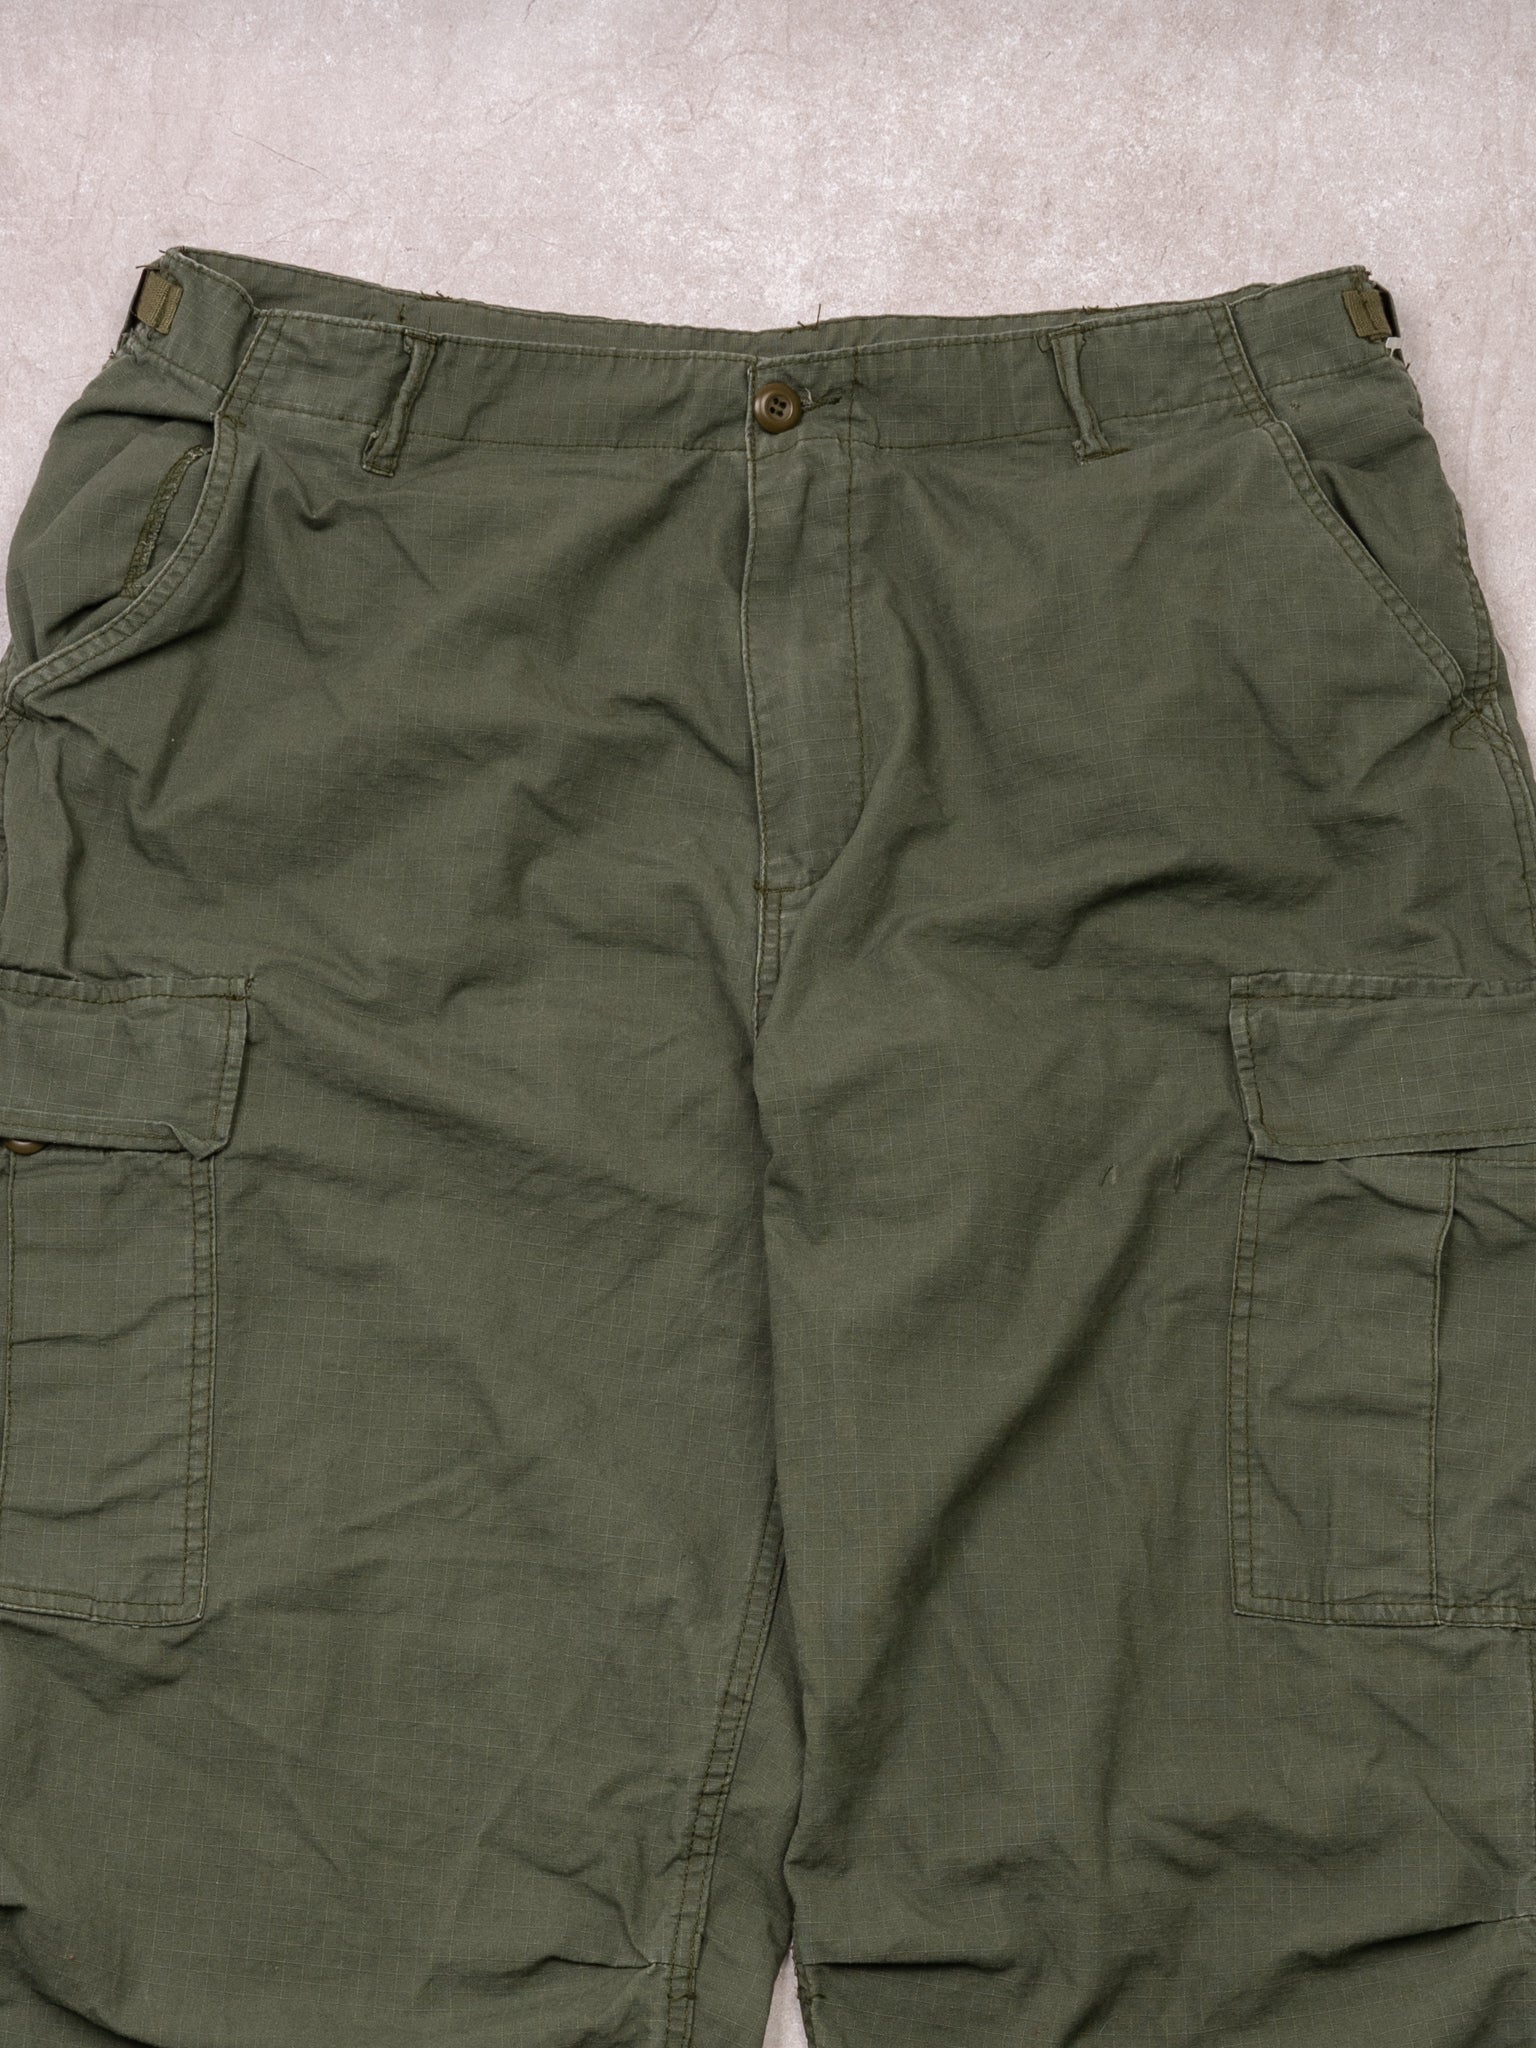 Vintage Green Army Adjustable Cargo Pants (35-39 x 32)